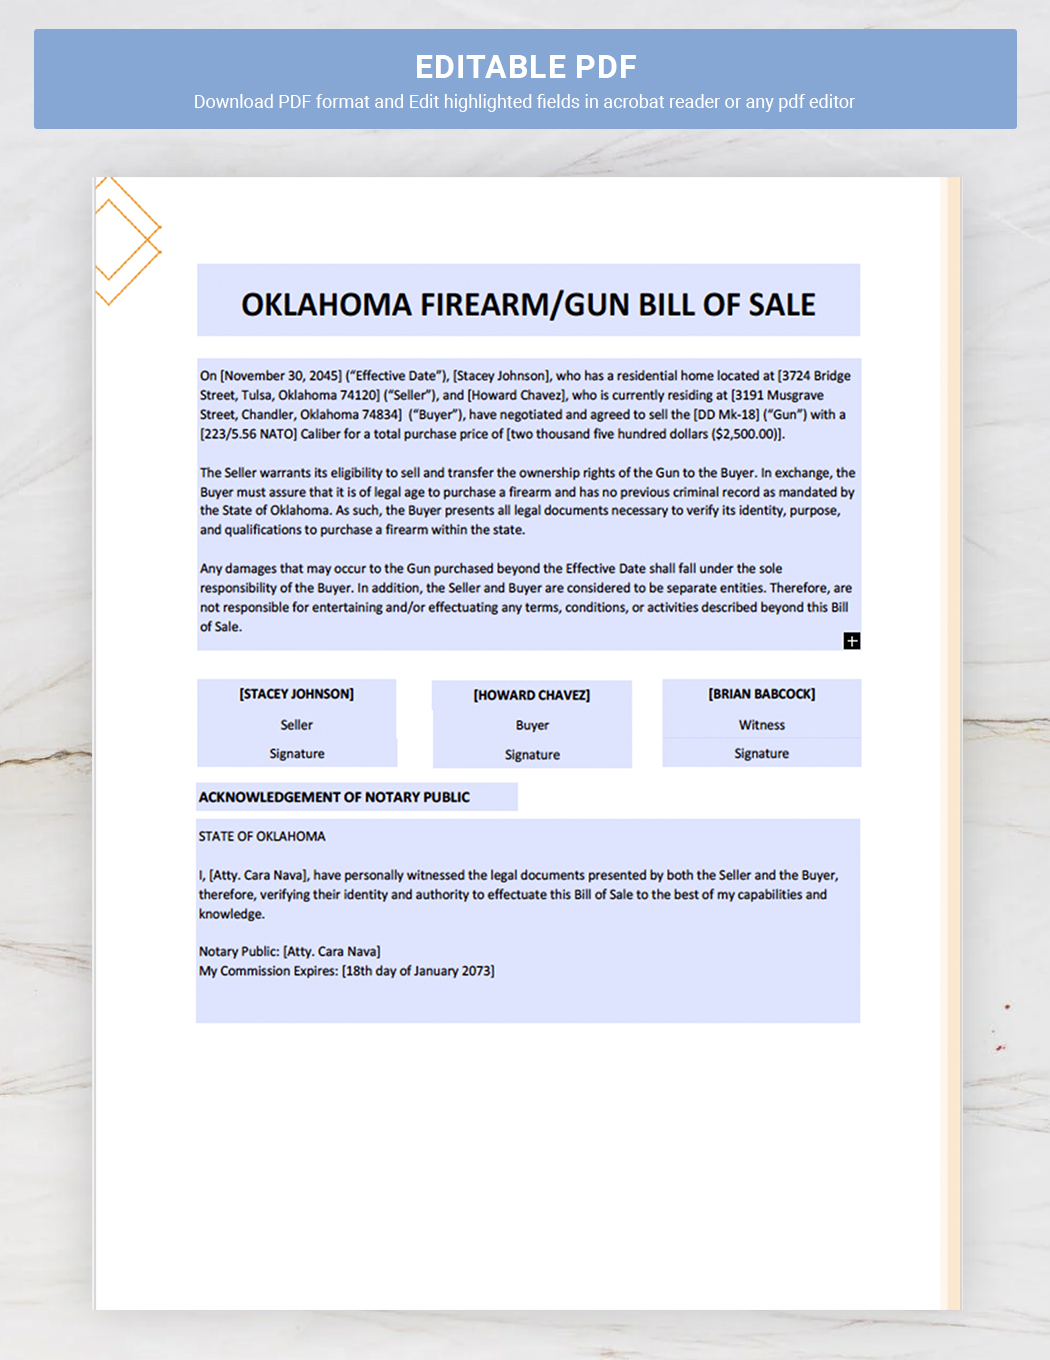 Oklahoma Firearm / Gun Bill of Sale Template